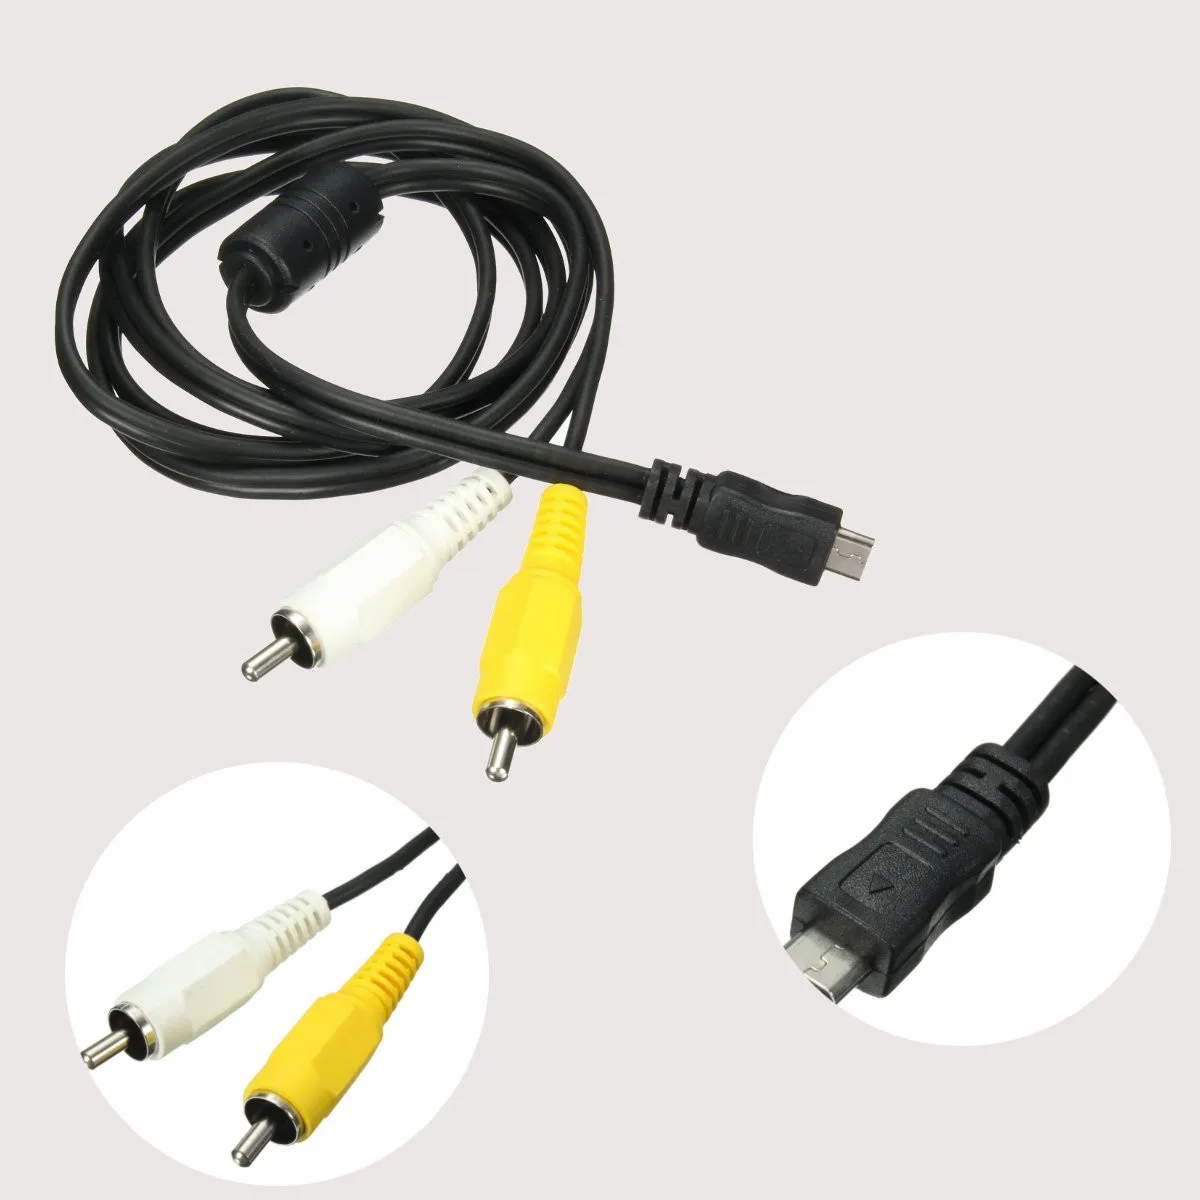 Usb Male Ke 2 Rca Male Av Adaptor Audio Video Kabel Kabel 140cm Untuk Samsung Android Ponsel Usb Cables Aliexpress